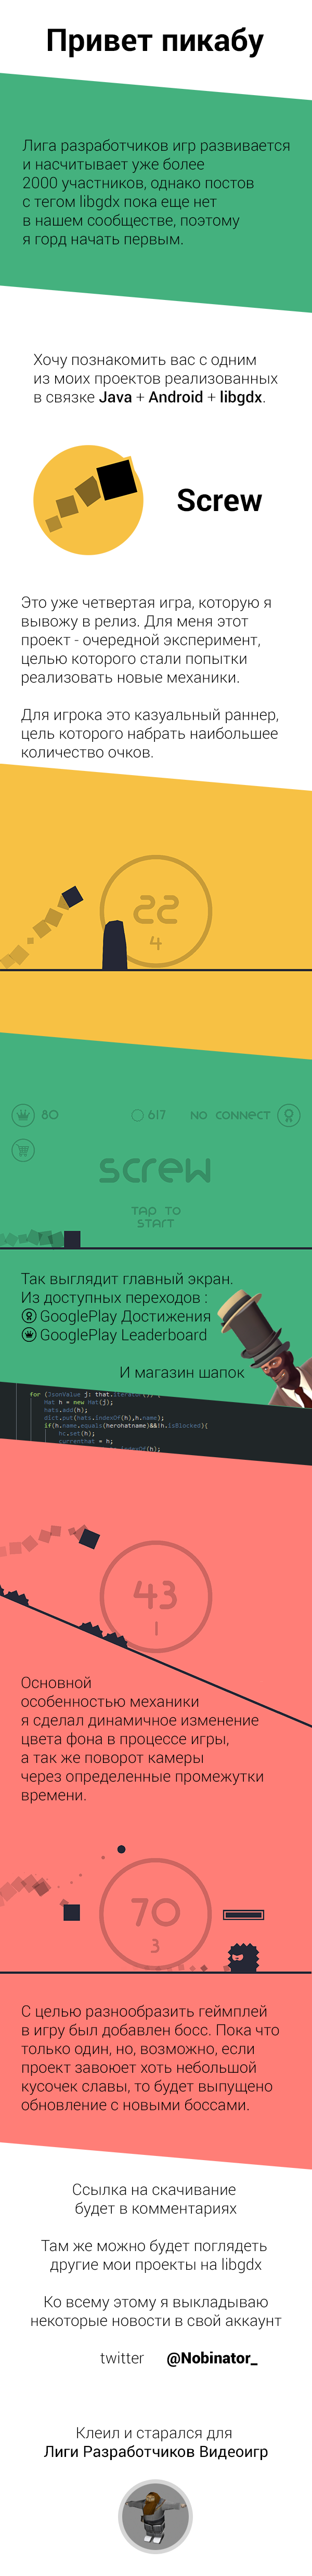  Screw. Java  Libgdx. Libgdx, Android, Gamedev, , Screw, Java